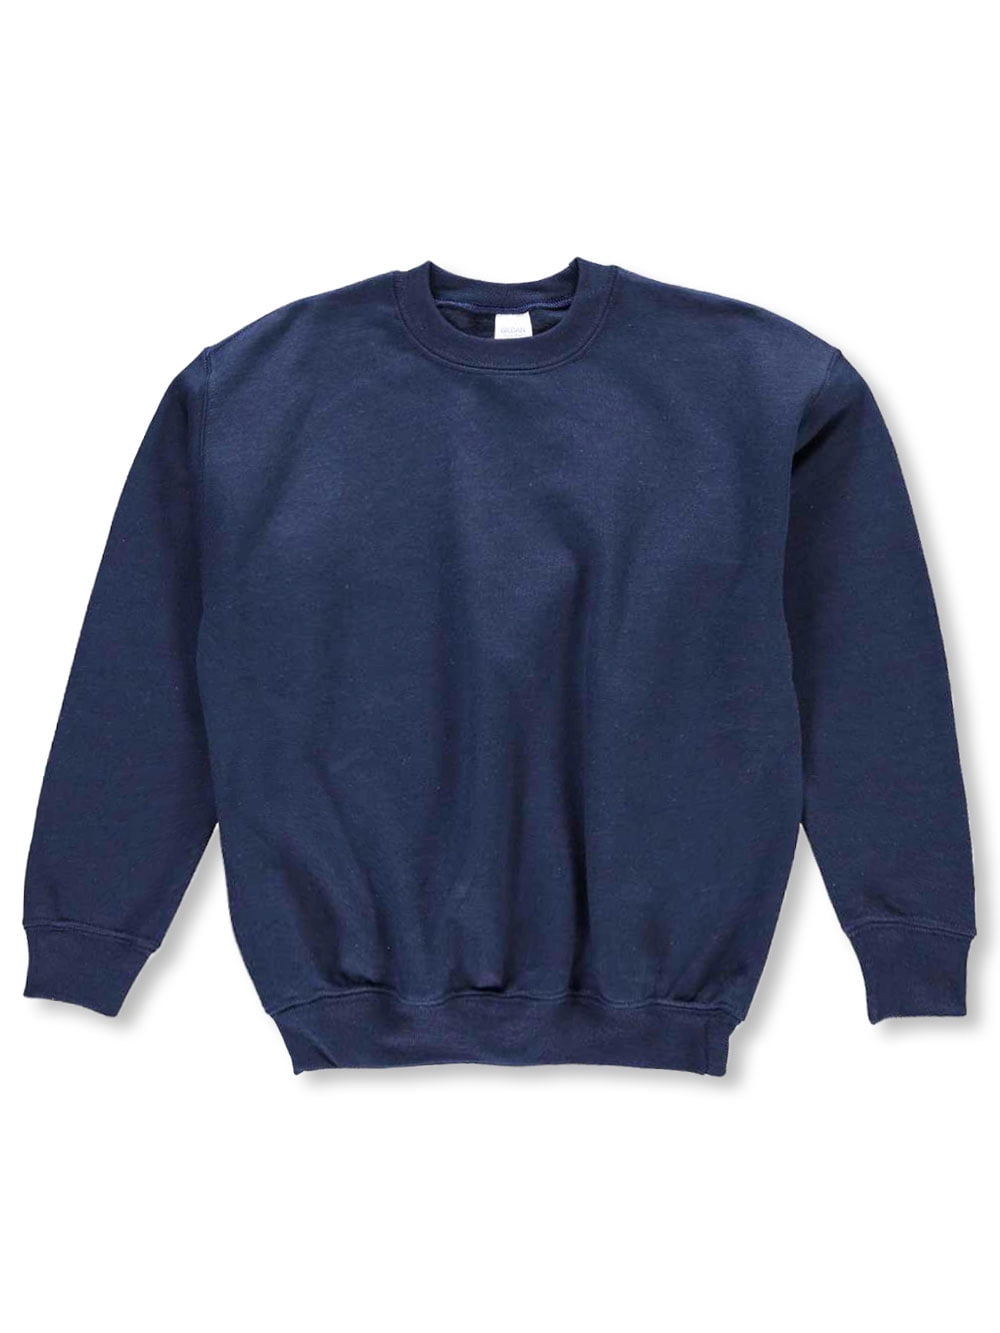 Gildan Unisex Youth Crewneck Sweatshirt (Sizes 4 - 20) - royal, l/14-16 (Big  Girls) 